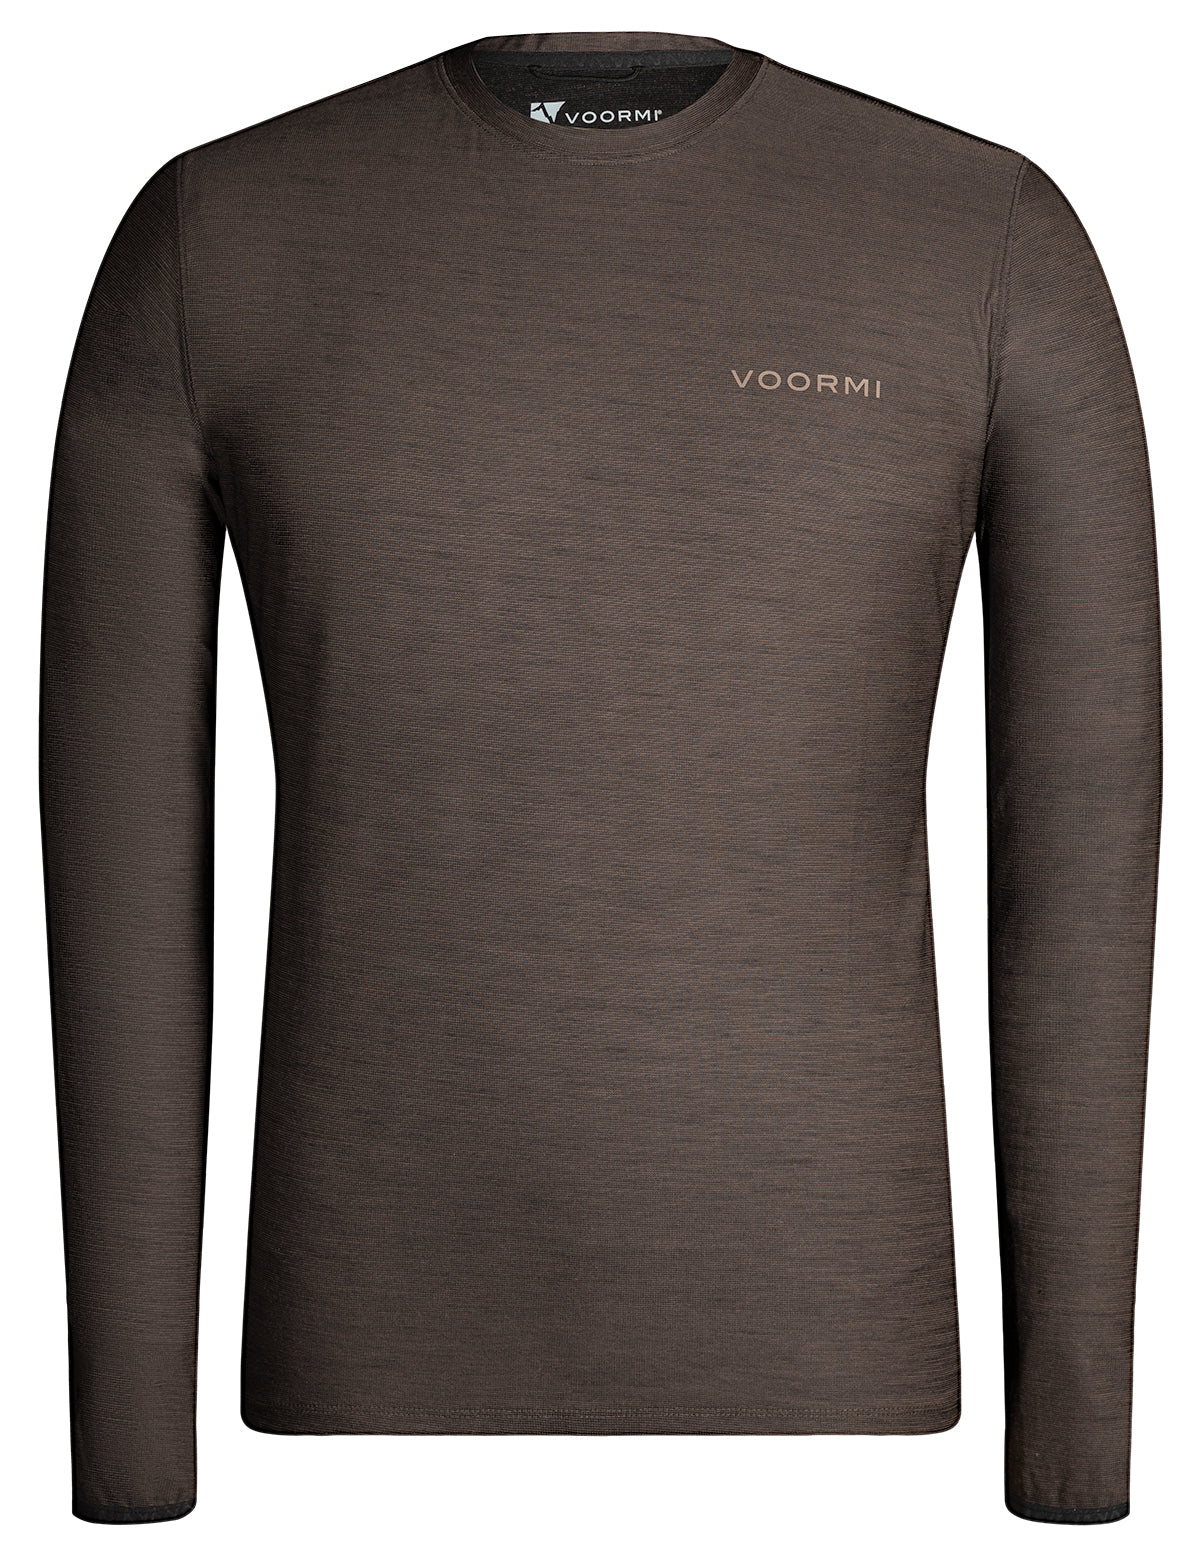 NINGMI Sauna Suit for Men Sweat - Long Sleeve Shirt Qatar